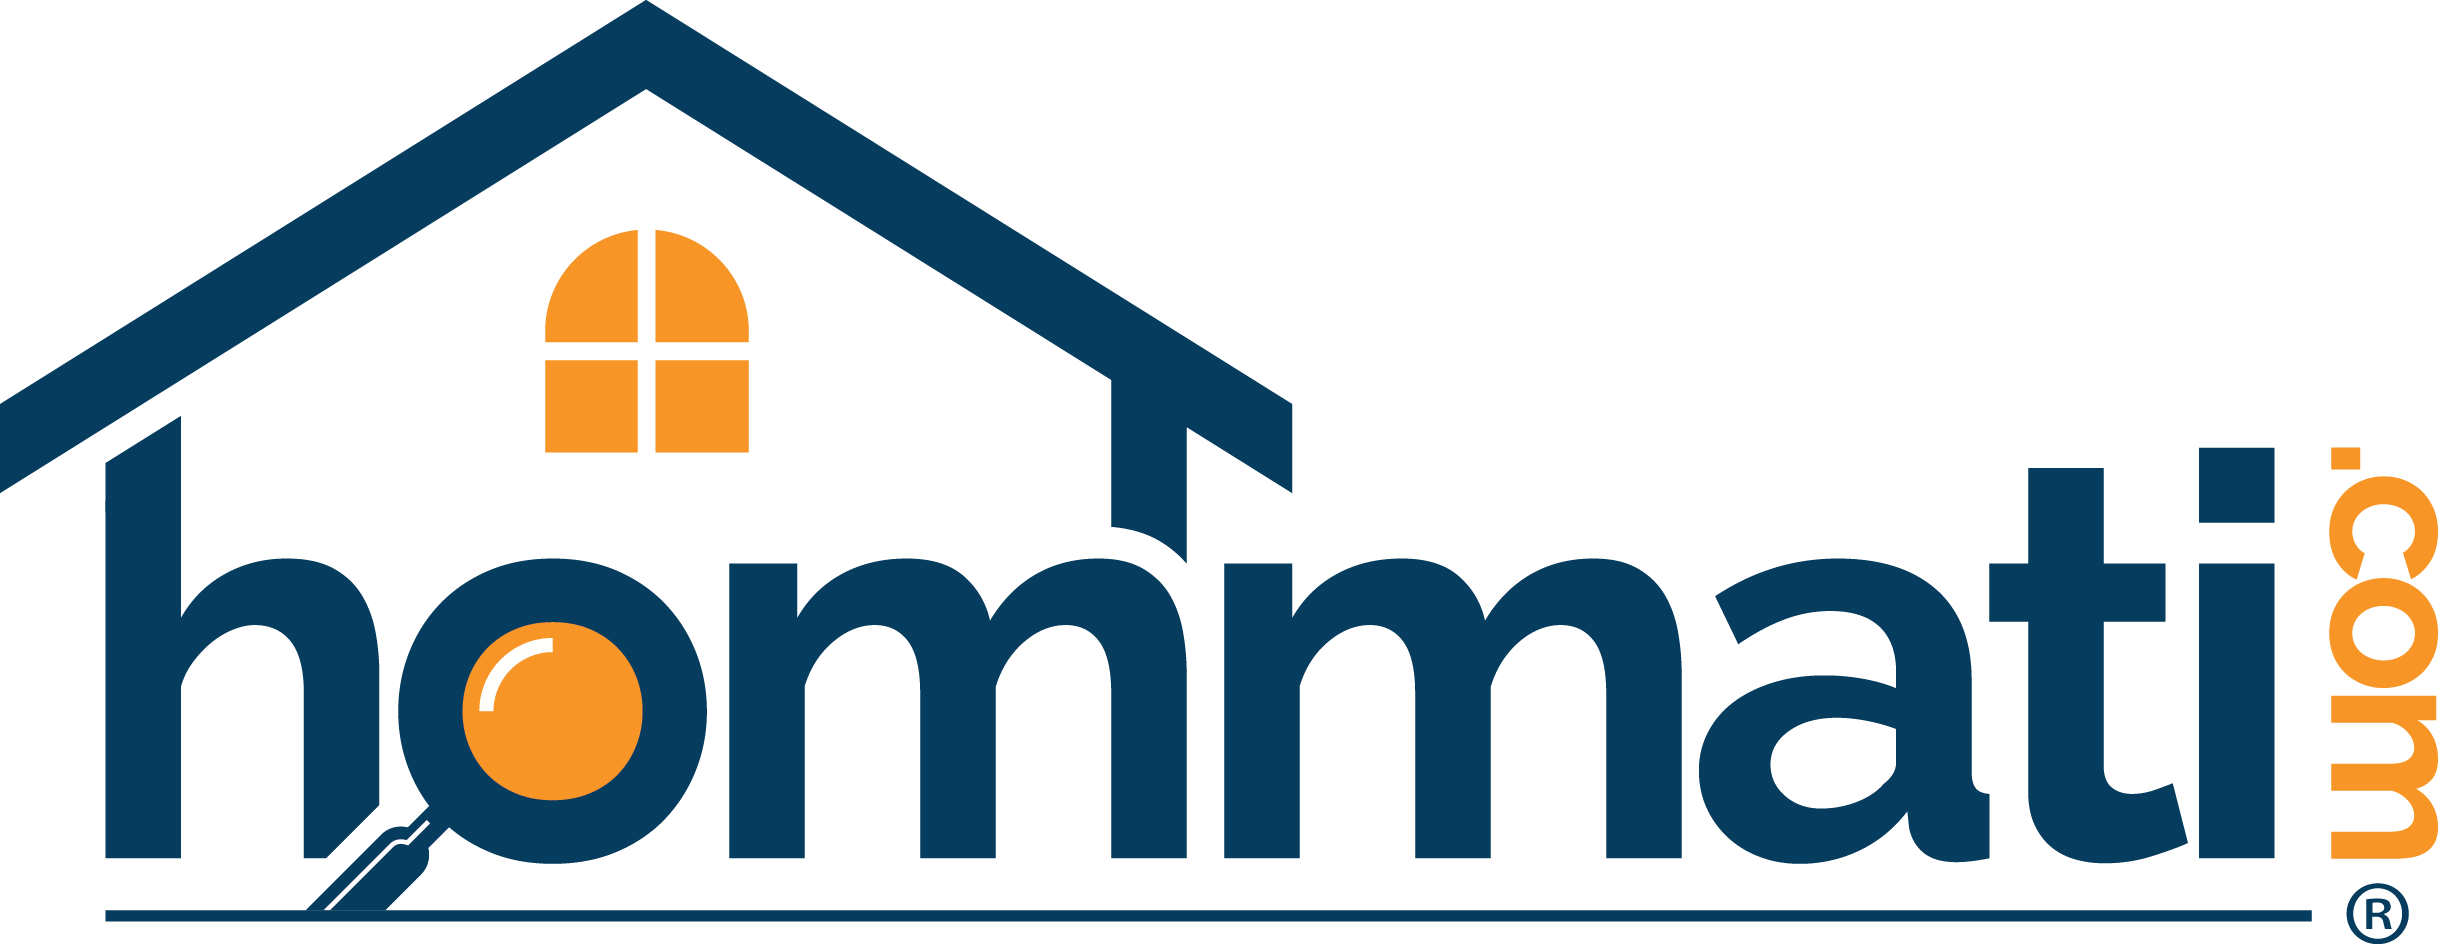 a blue and orange logo